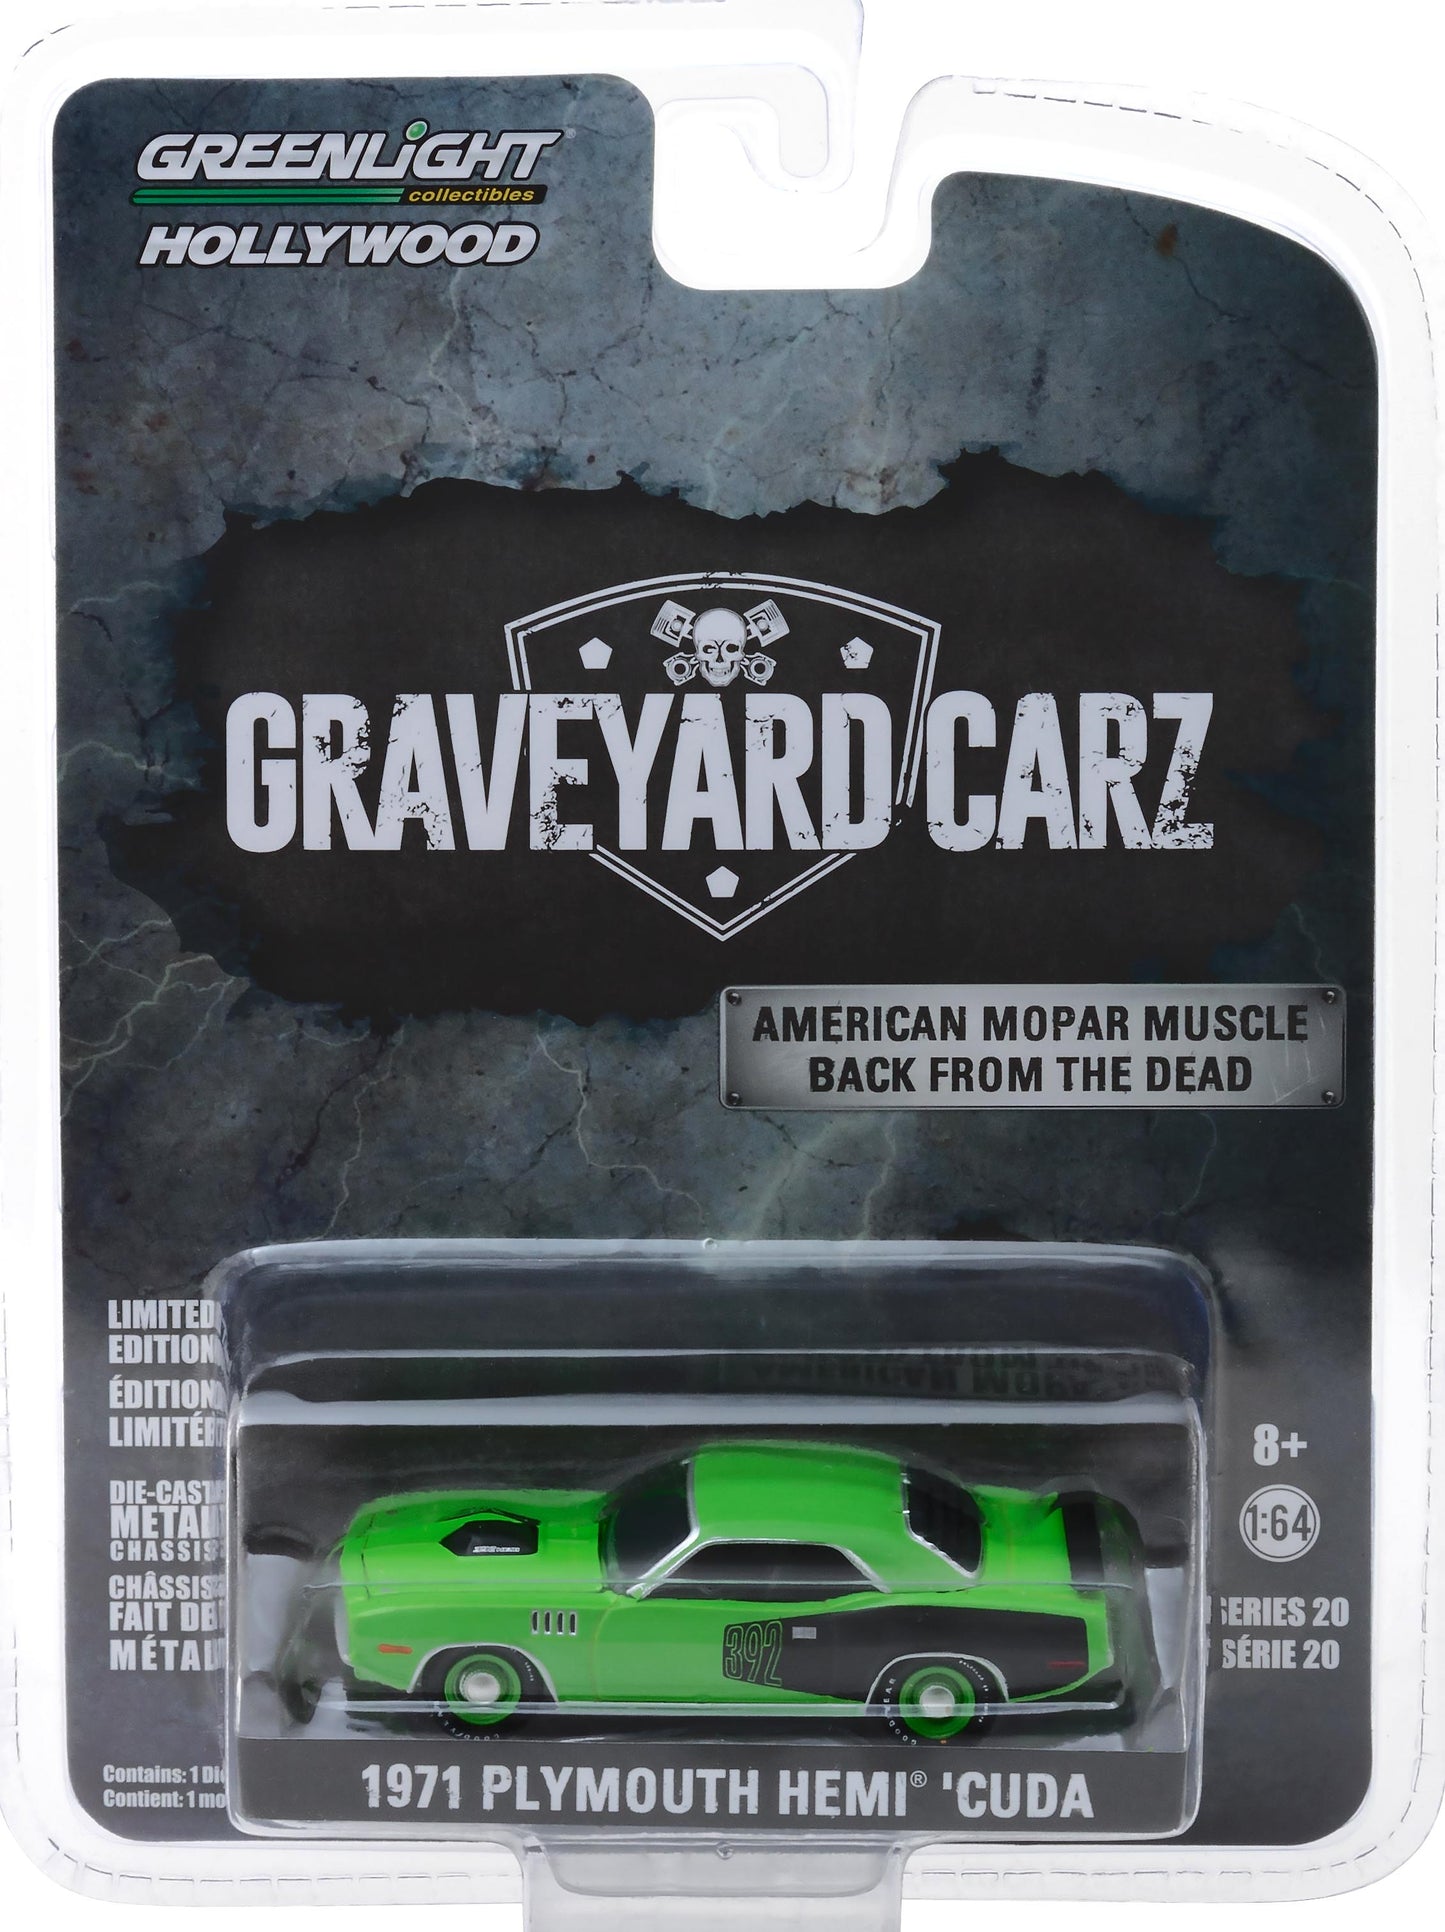 1971 Plymouth Hemi 'Cuda "Graveyard Carz"